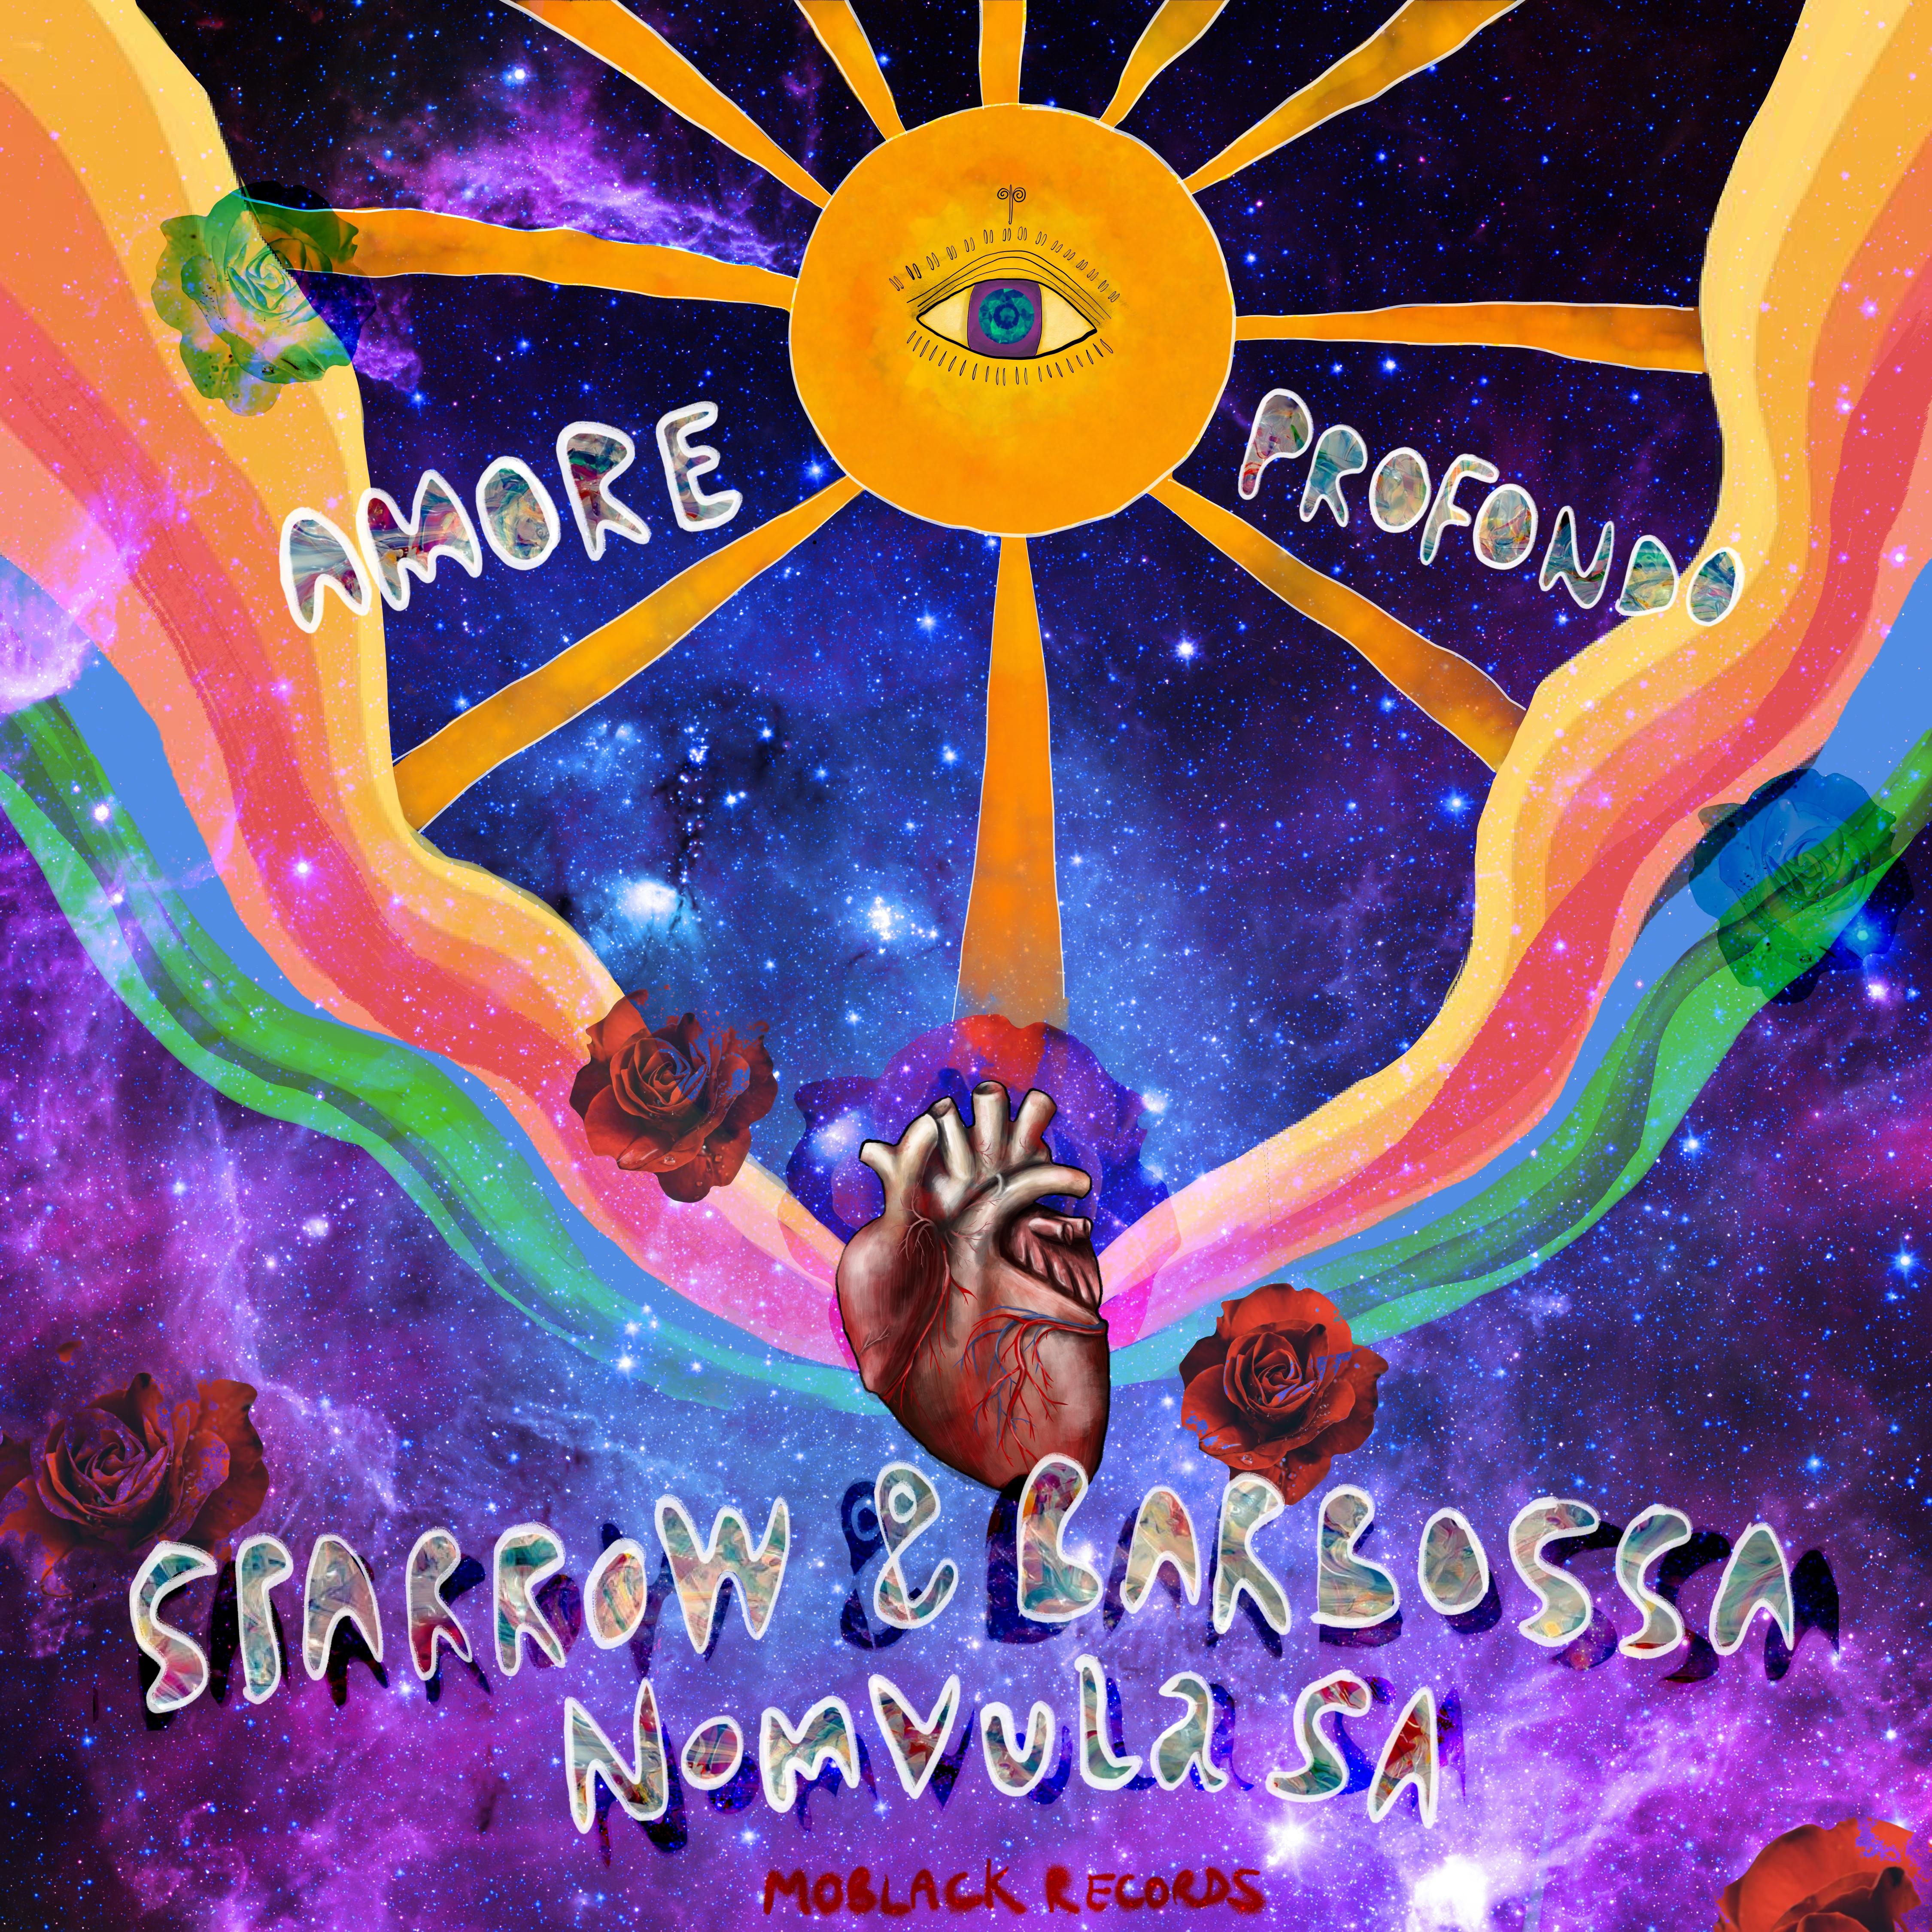 Sparrow & Barbossa - Amore Profondo (Breeze and The Sun & Neil Amarey Rmx)